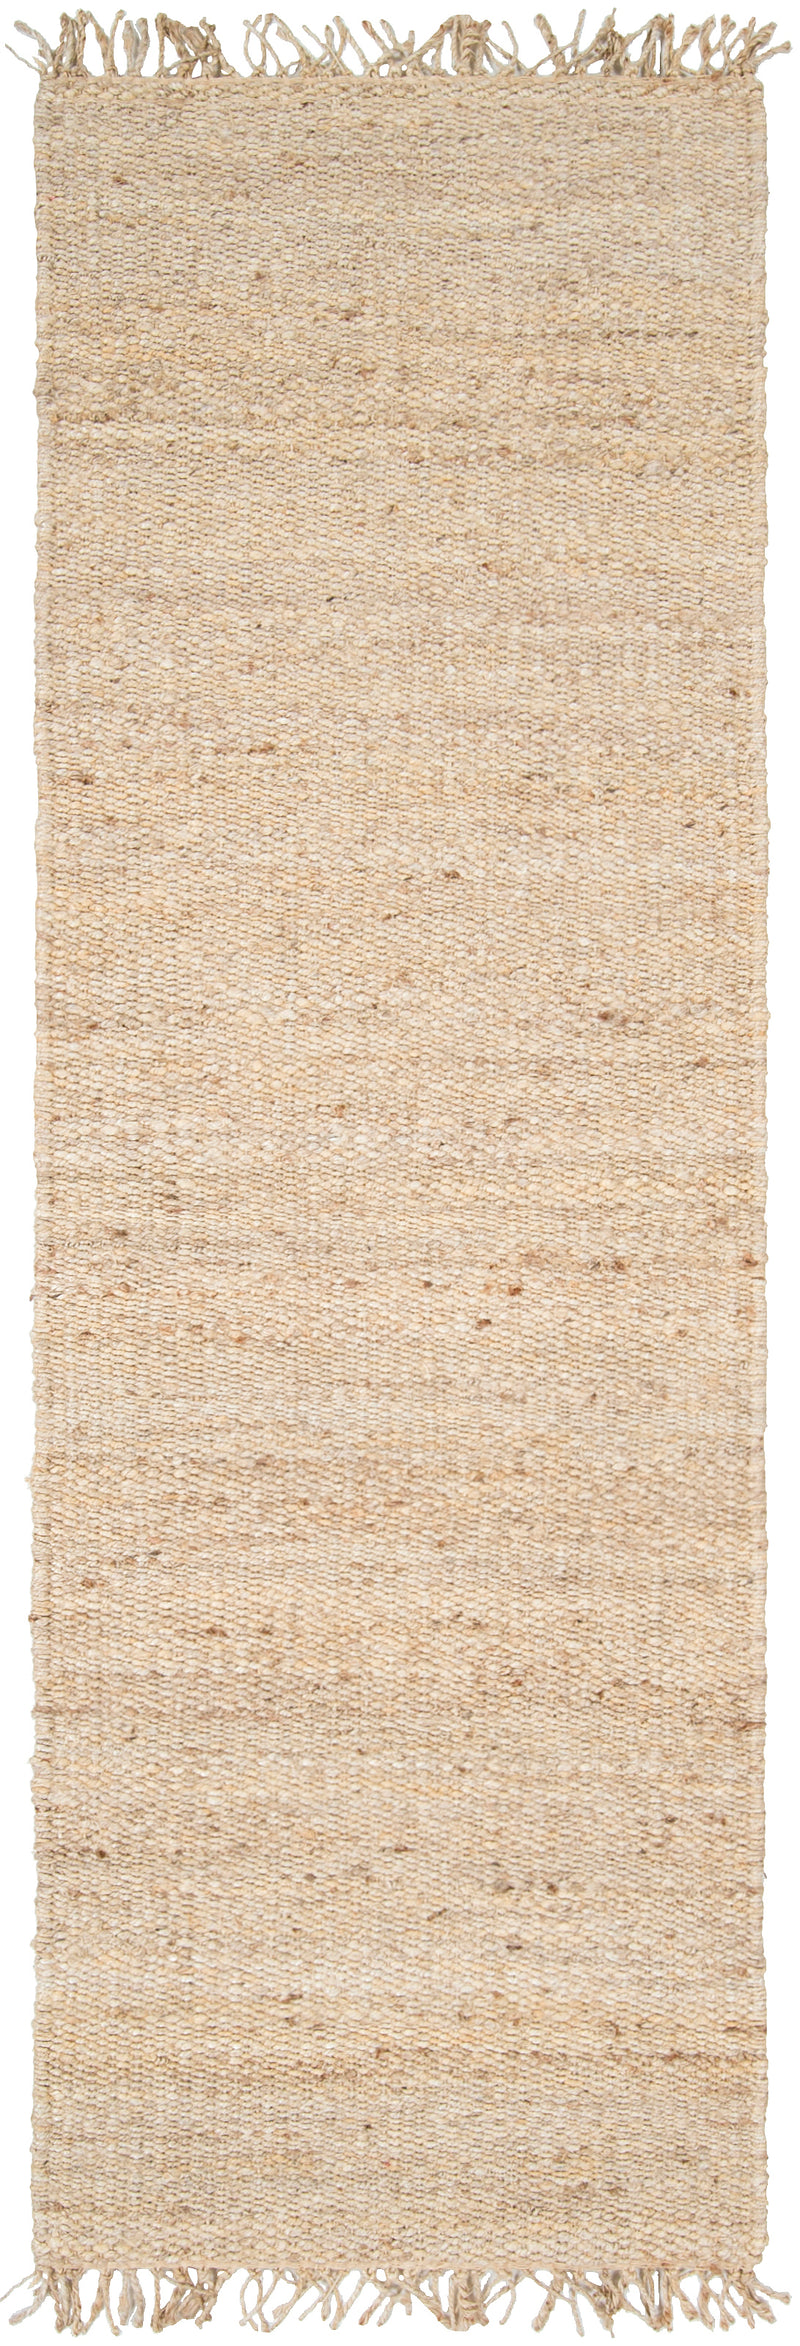 media image for jute rug design by surya 2 256